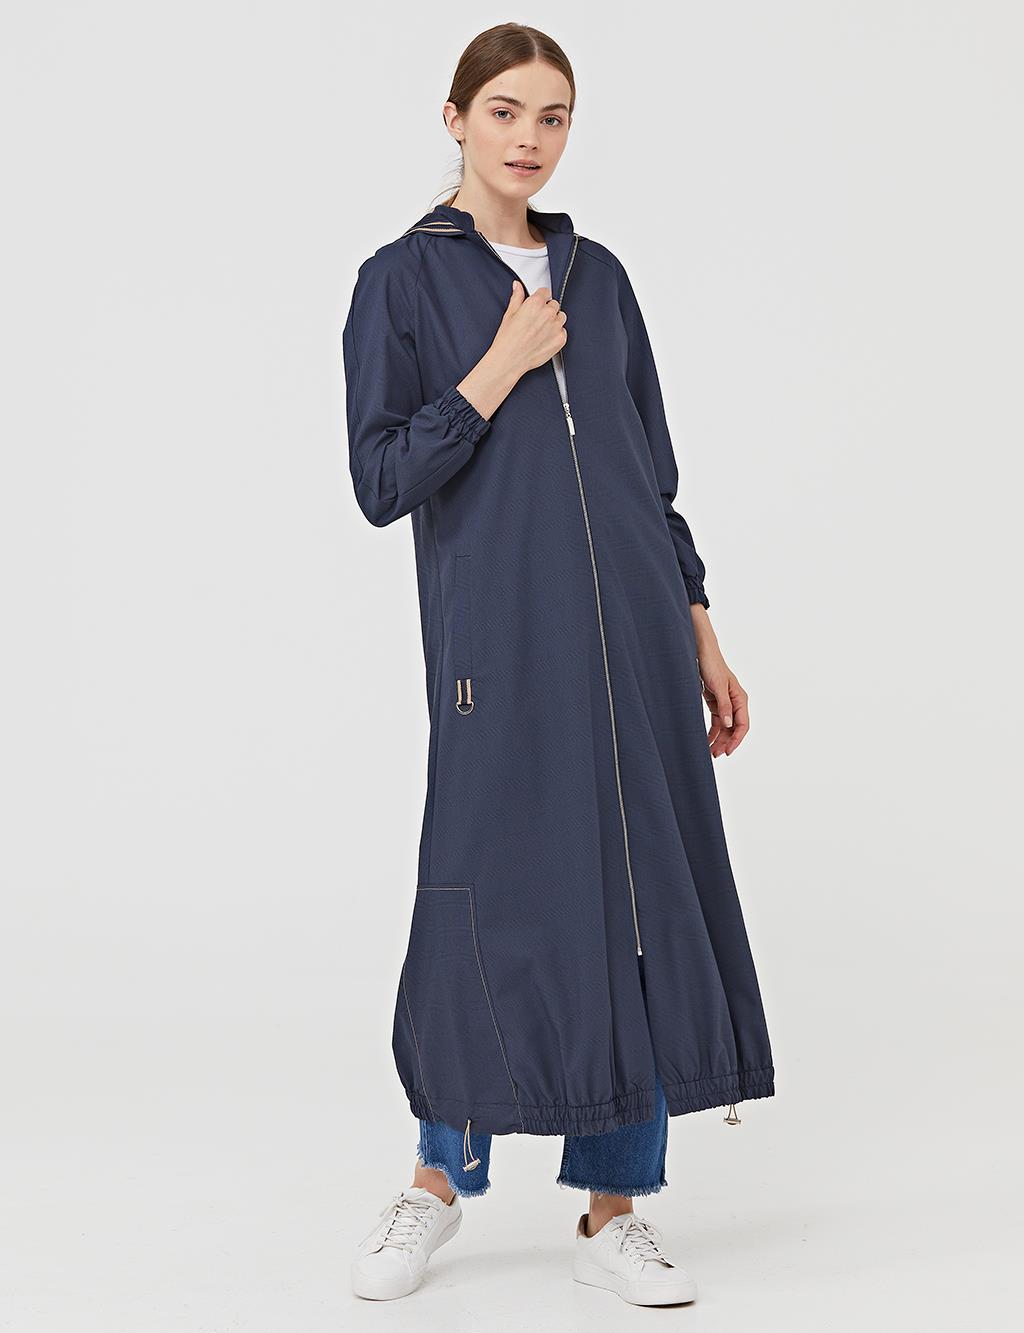 Hooded Long Wear / Go Abaya A21 25008 Navy